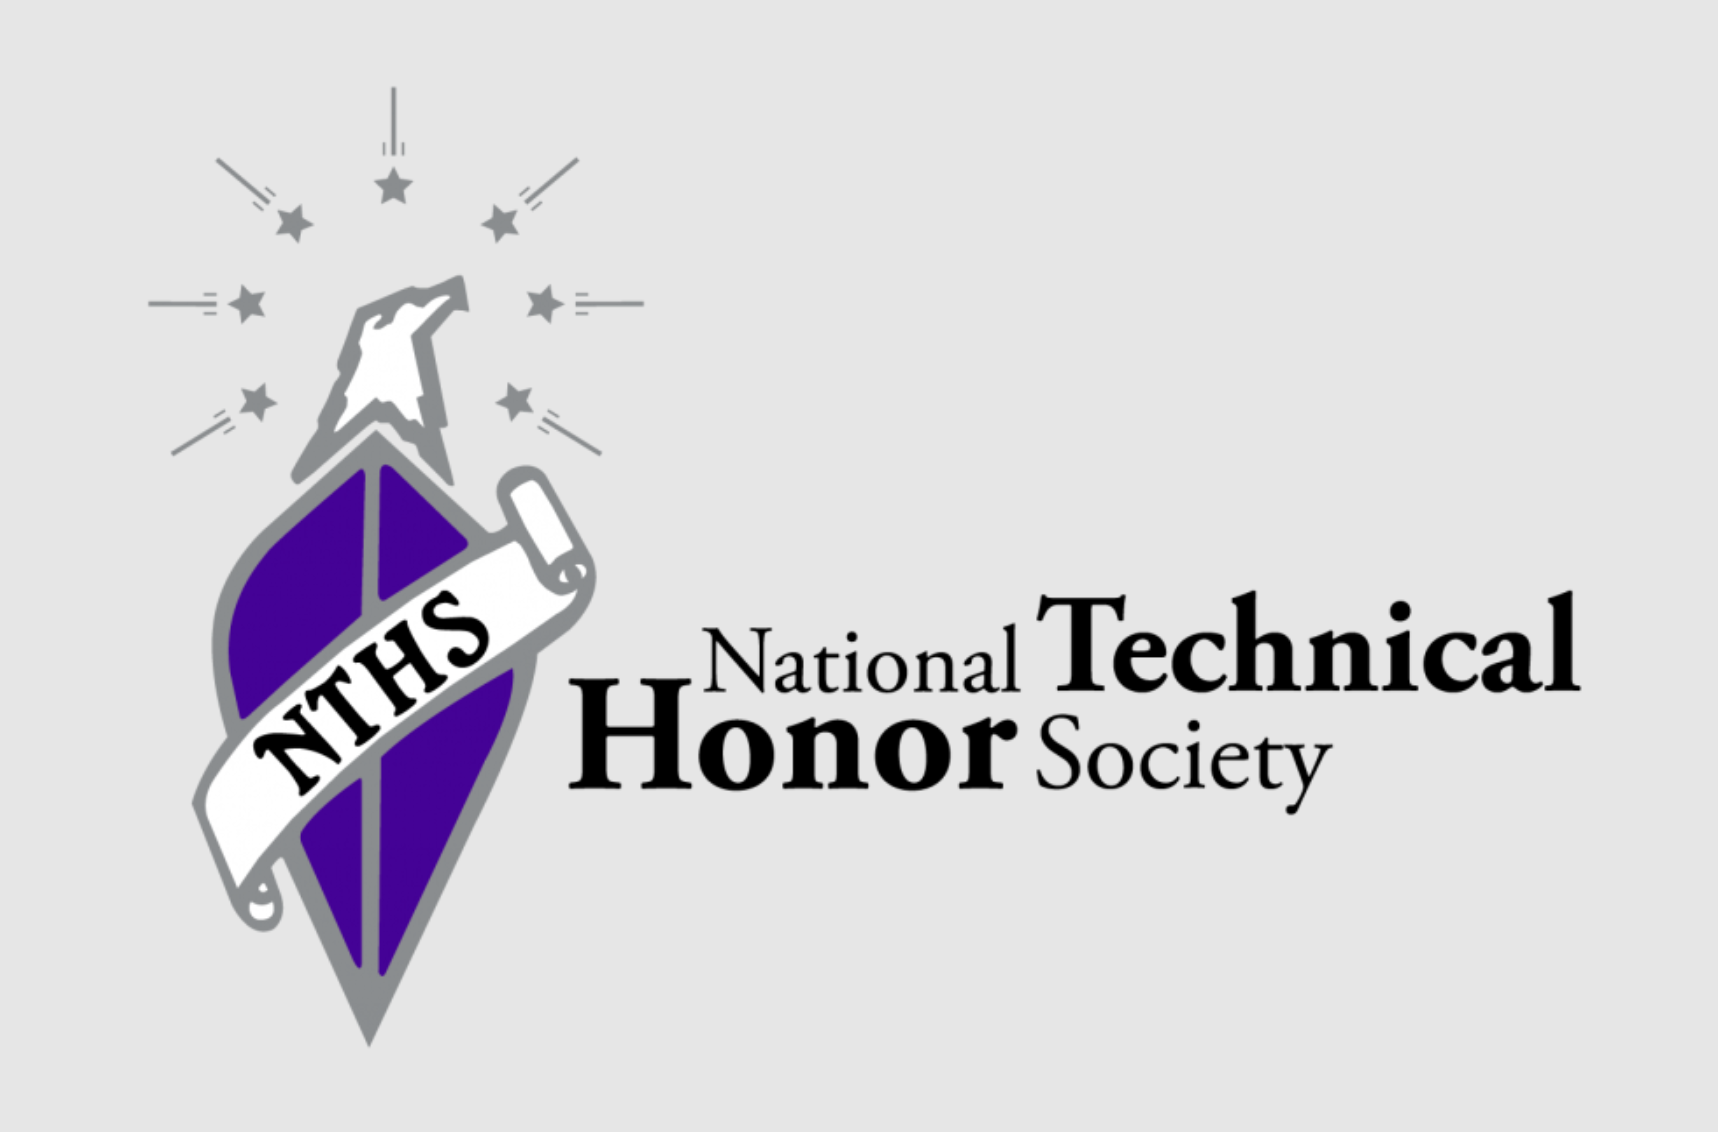 National Technical Honor Society Logo